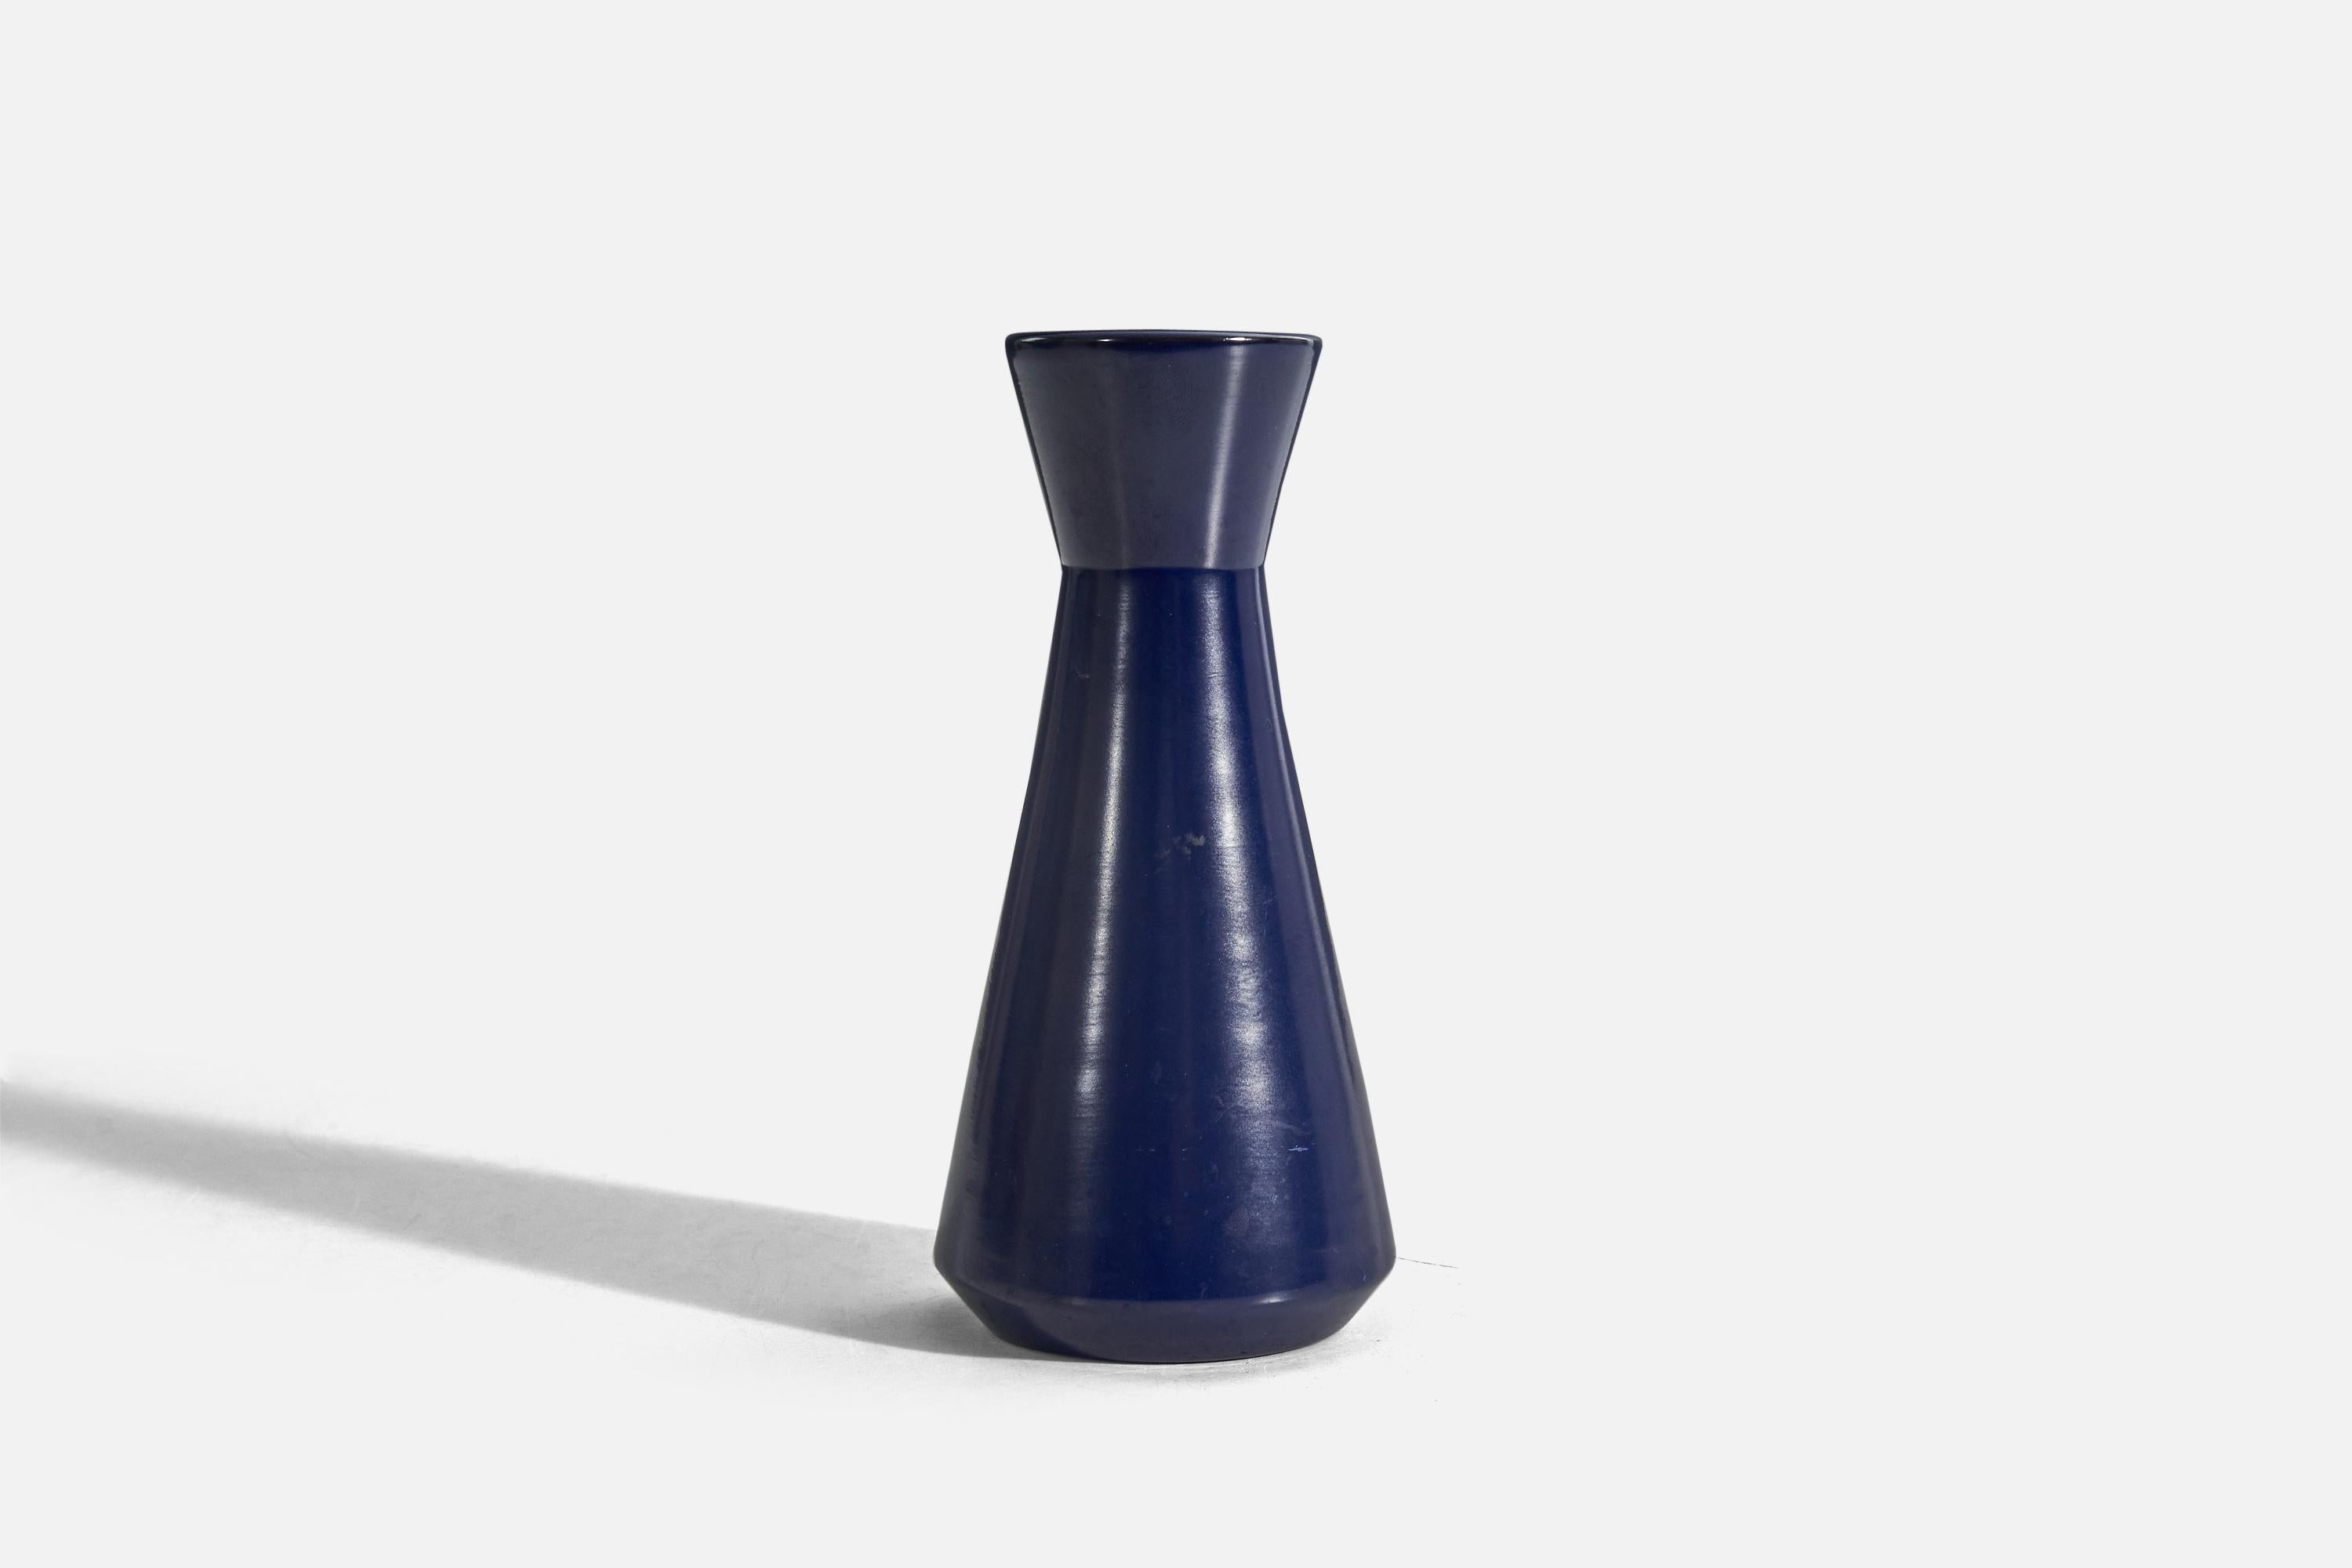 Scandinavian Modern Nittsjö, Vase, Blue-Glazed Earthenware, Sweden, 1940s For Sale